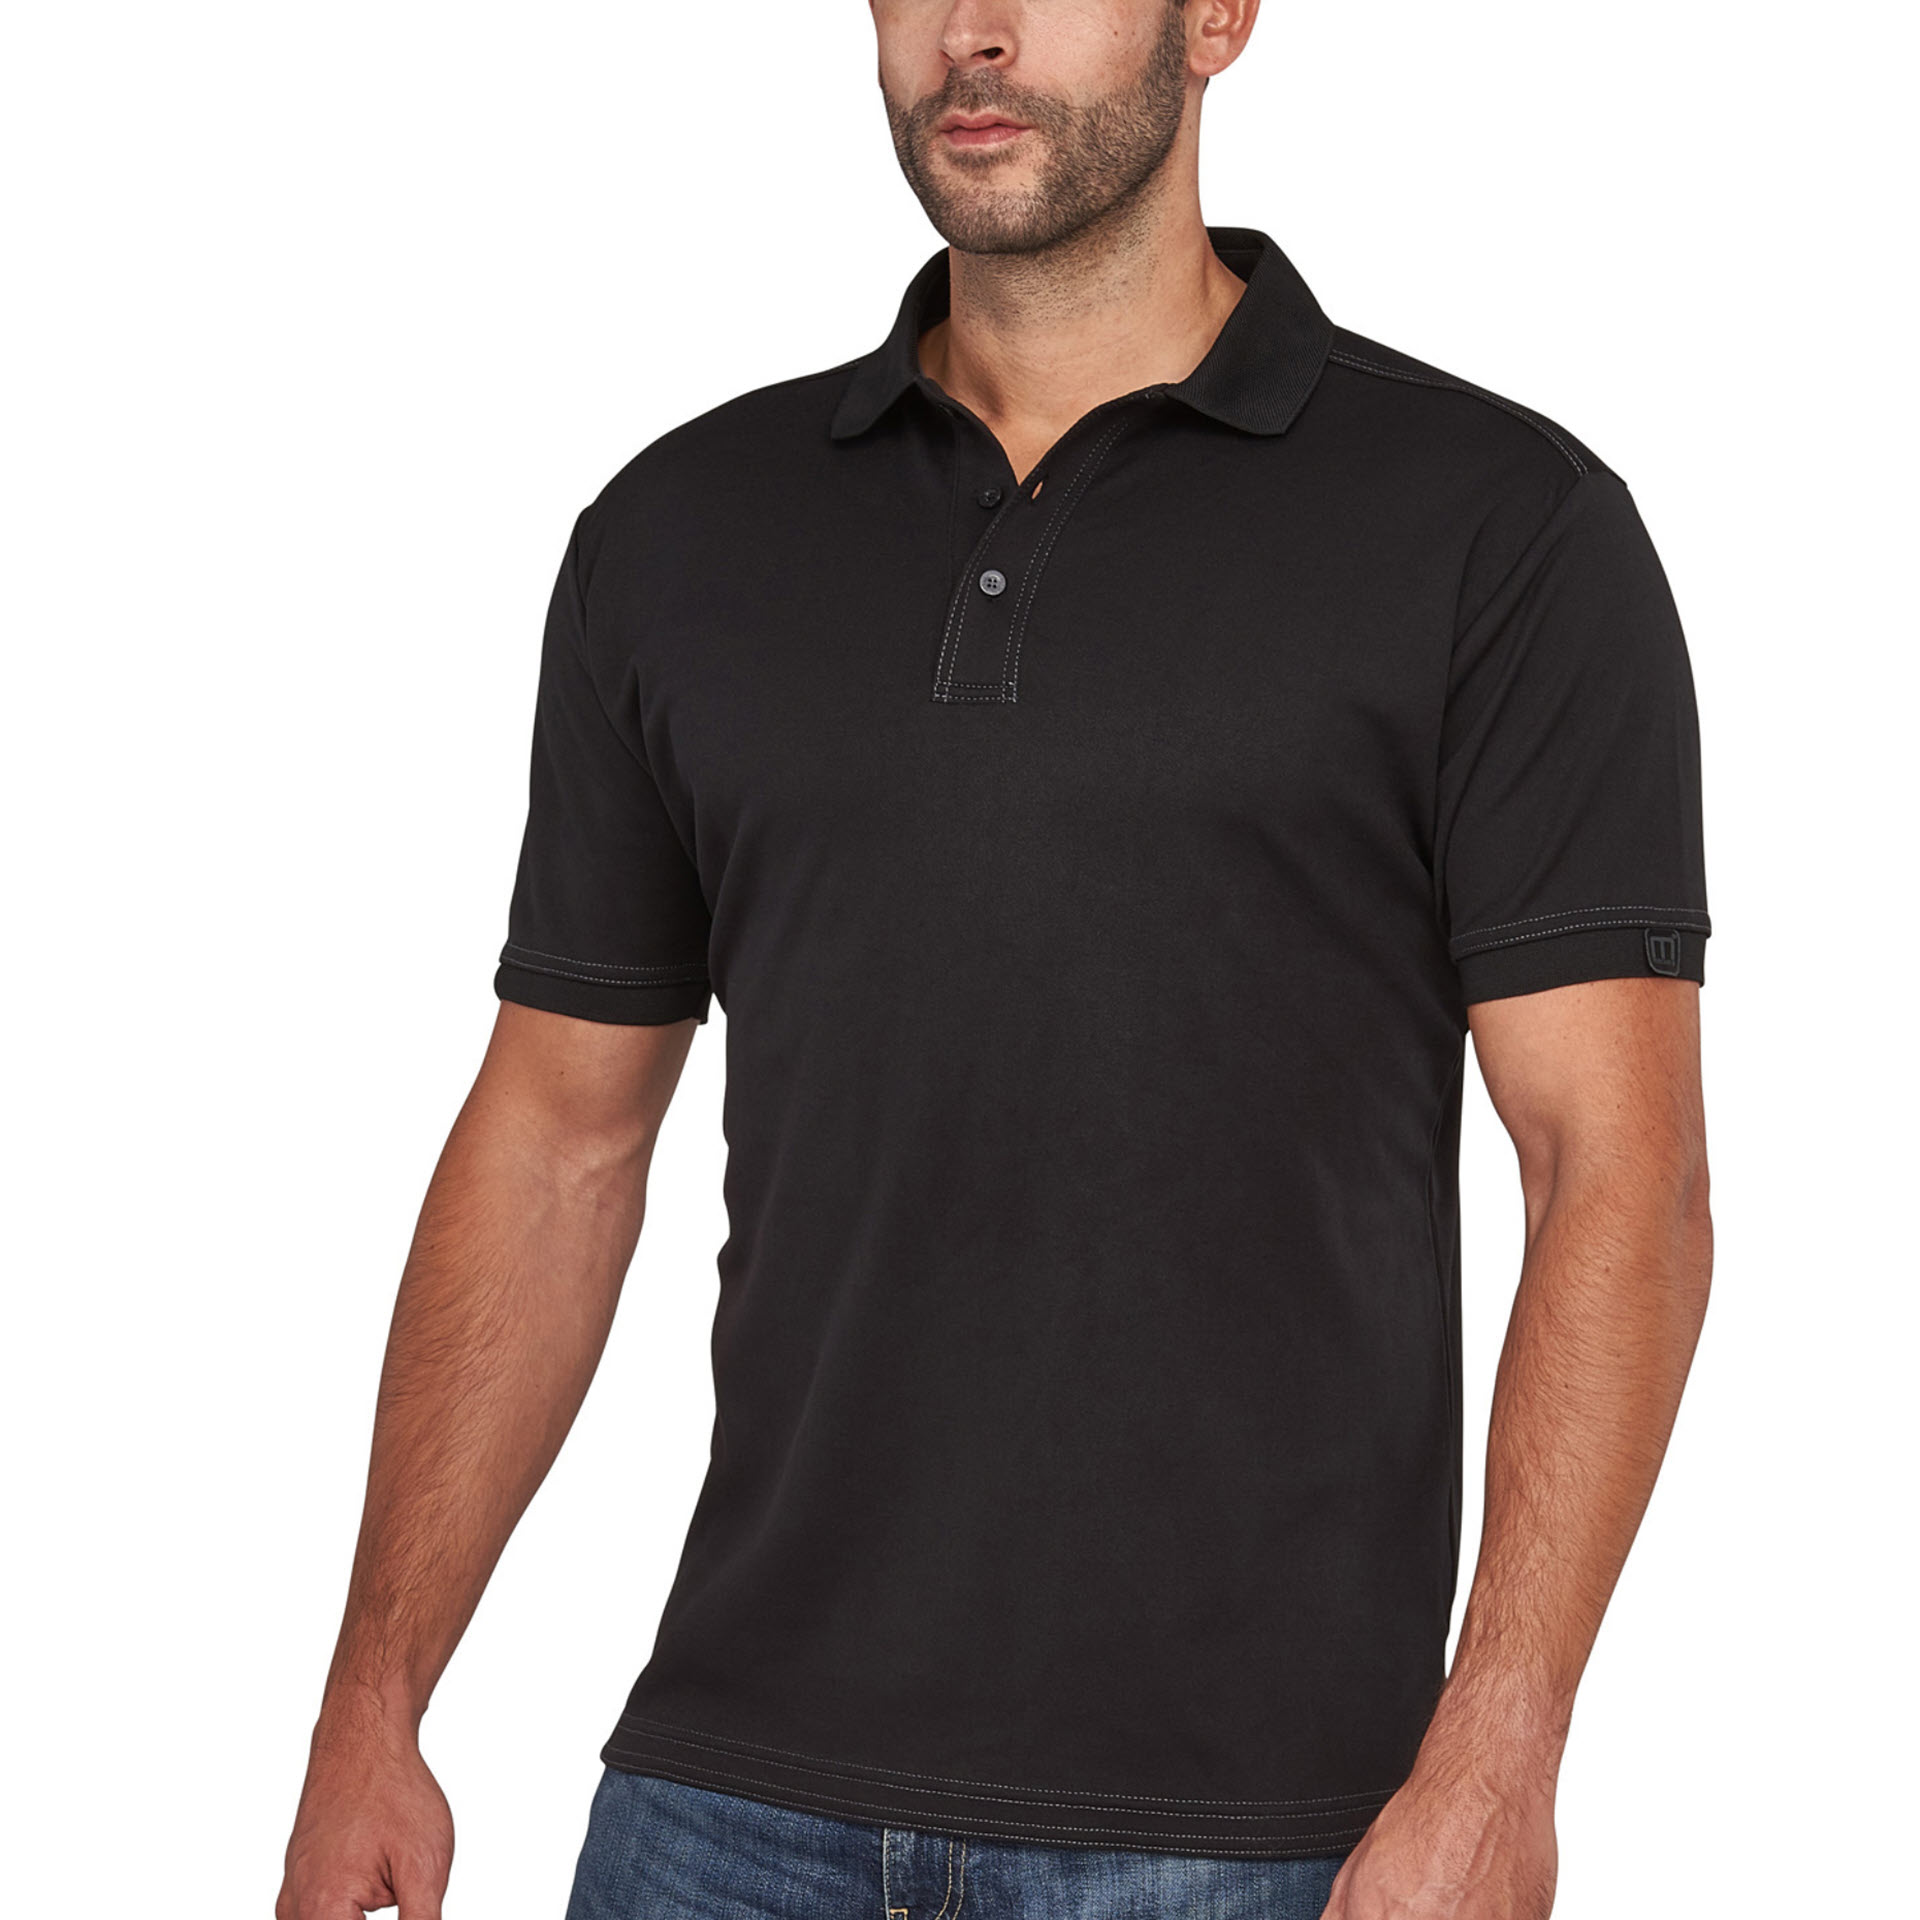 MACSEIS® Signature PowerDry Workwear Herren Polo Shirt - Farbe: schwarz/grau